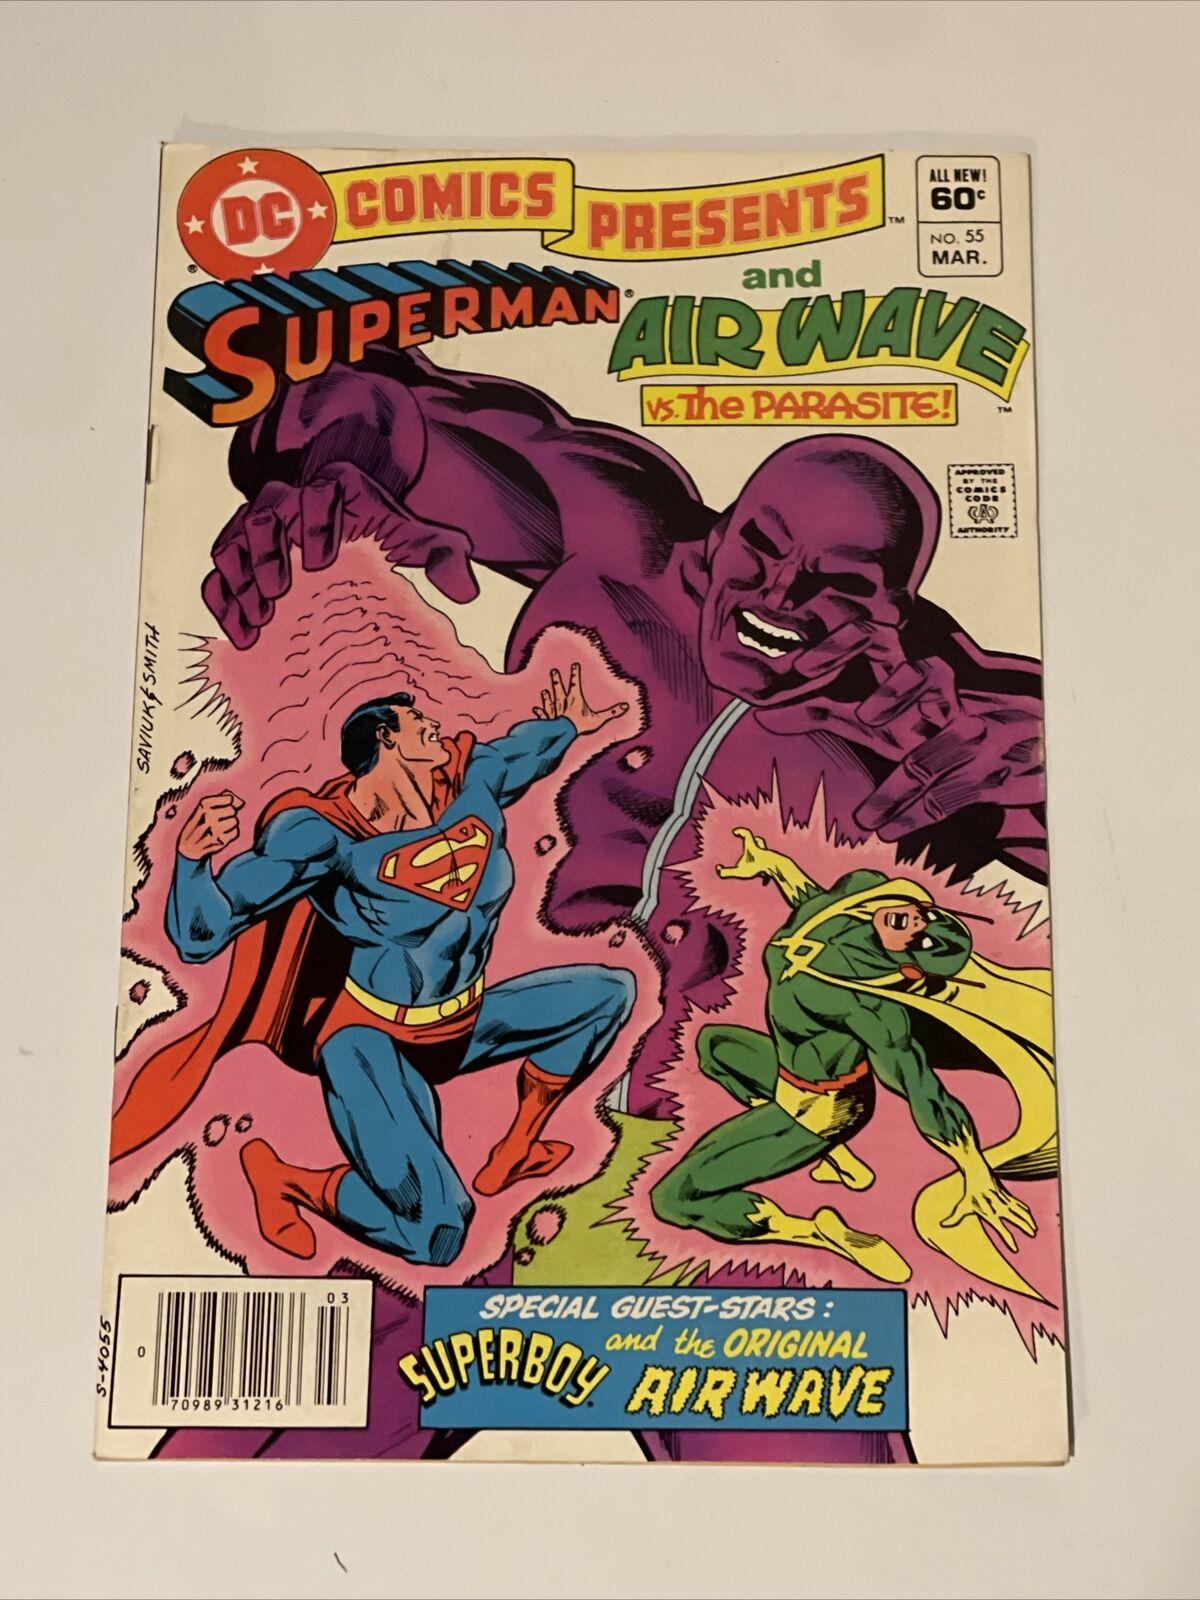 VTG 1982 DC Comics Presents Superman and Air Wave vs The Parasite #55 Bronze Age